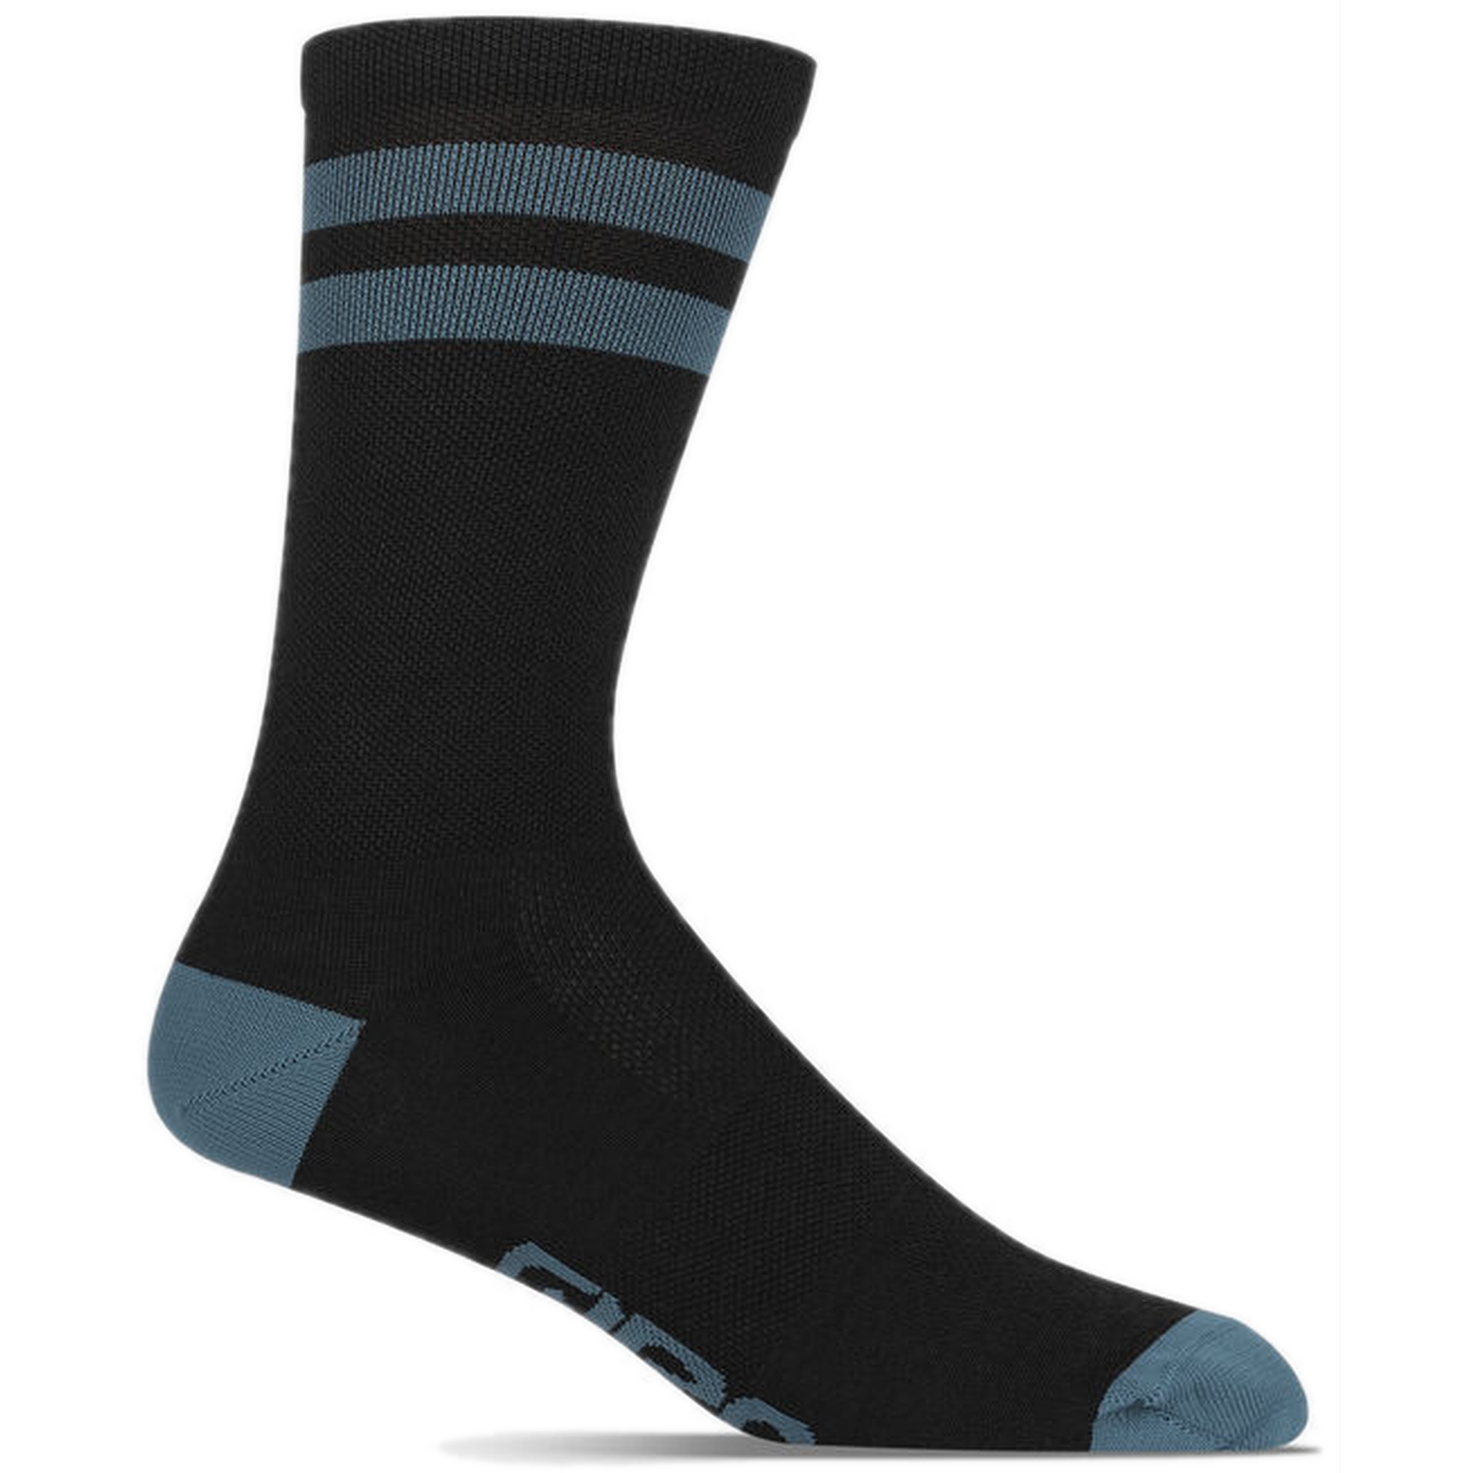 Image of Giro Winter Merino Wool Socks - black/harbor blue